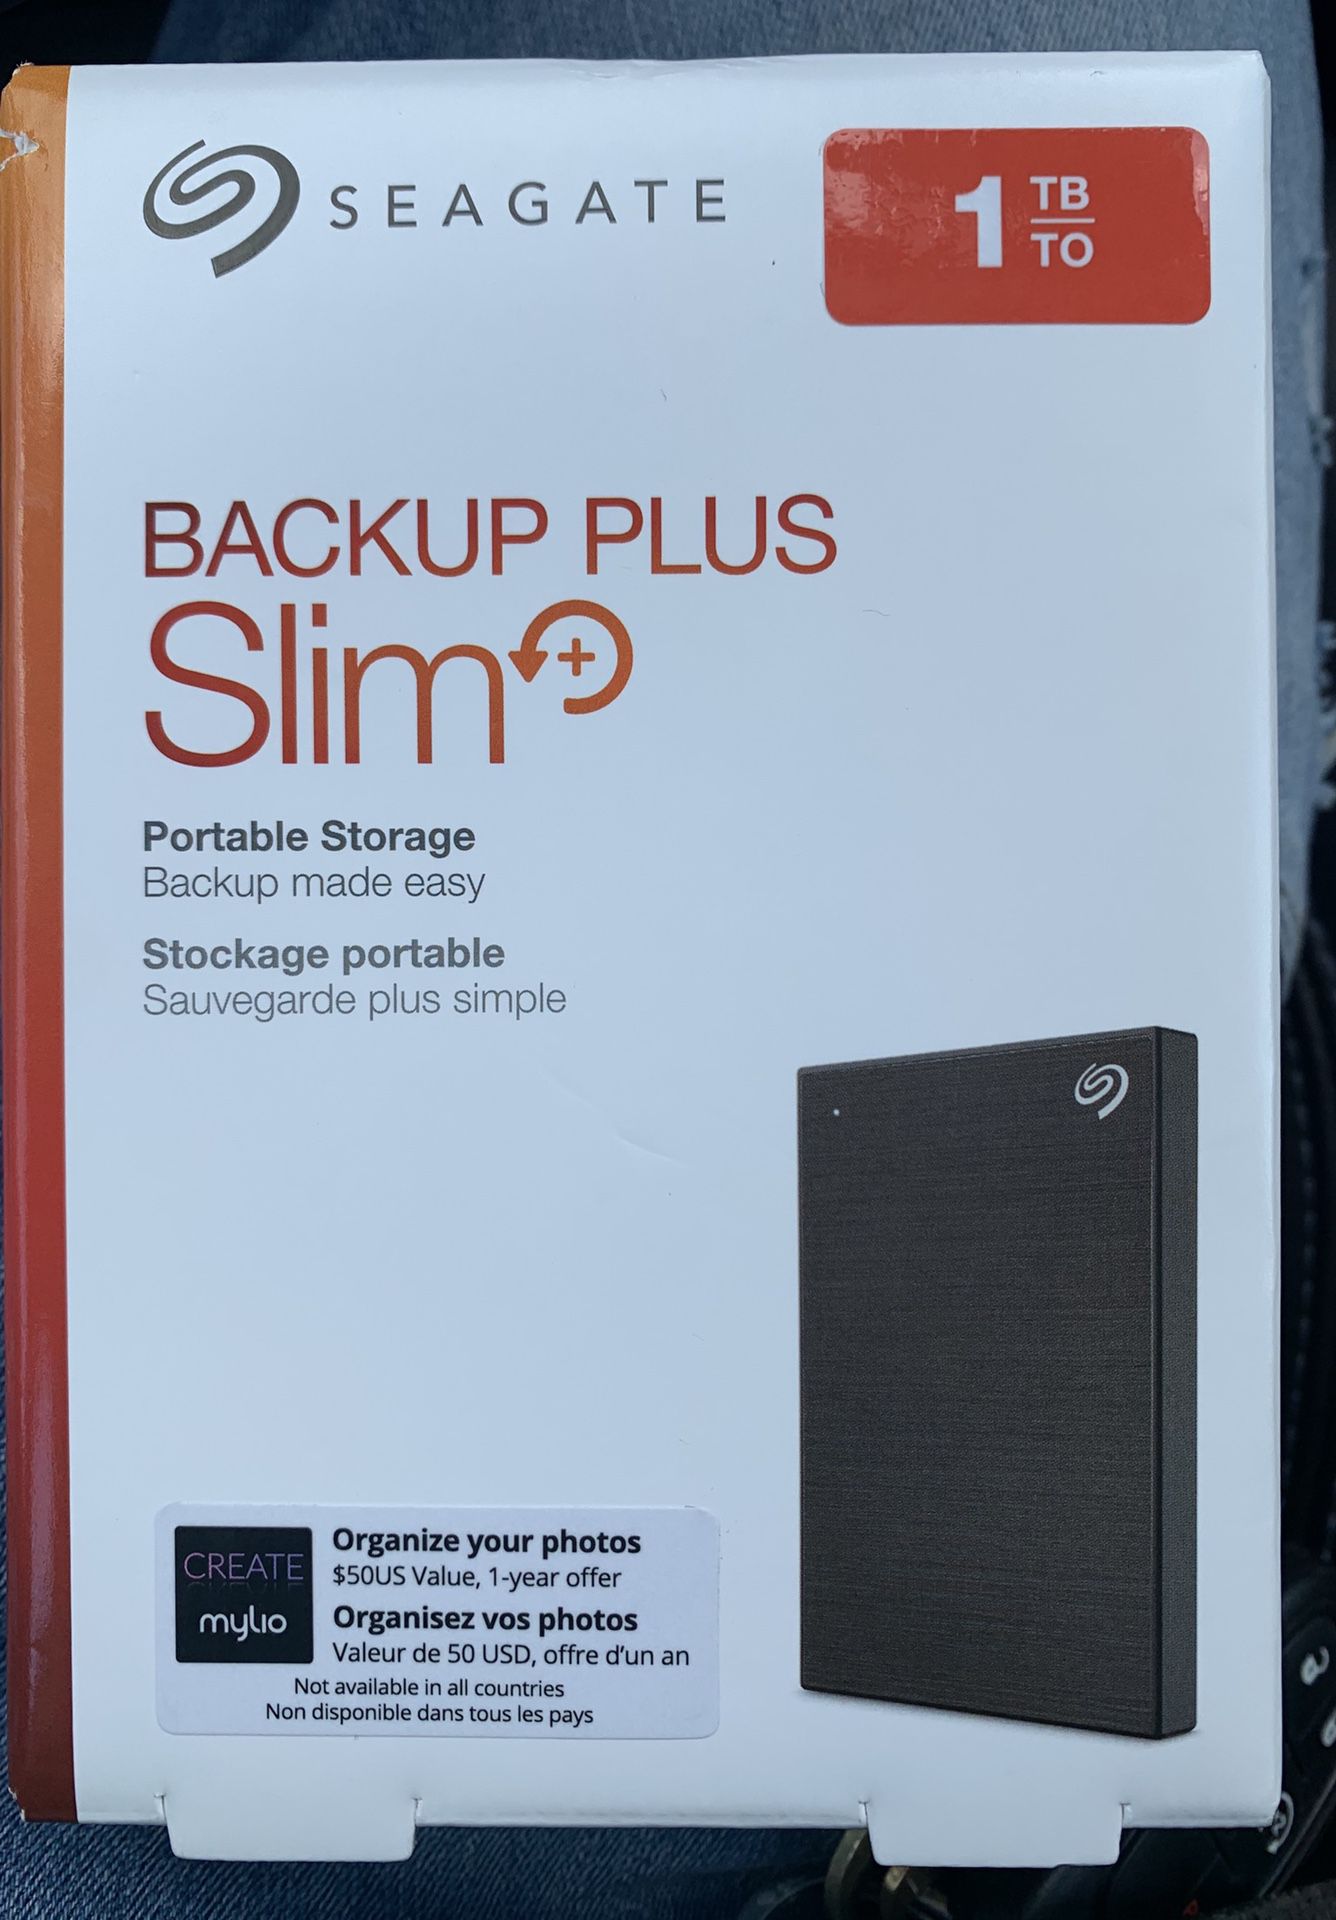 Seagate Backup Plus Slim 1TB USB 3.0/USB 2.0 External Hard Drive, Black (STHN1000400)